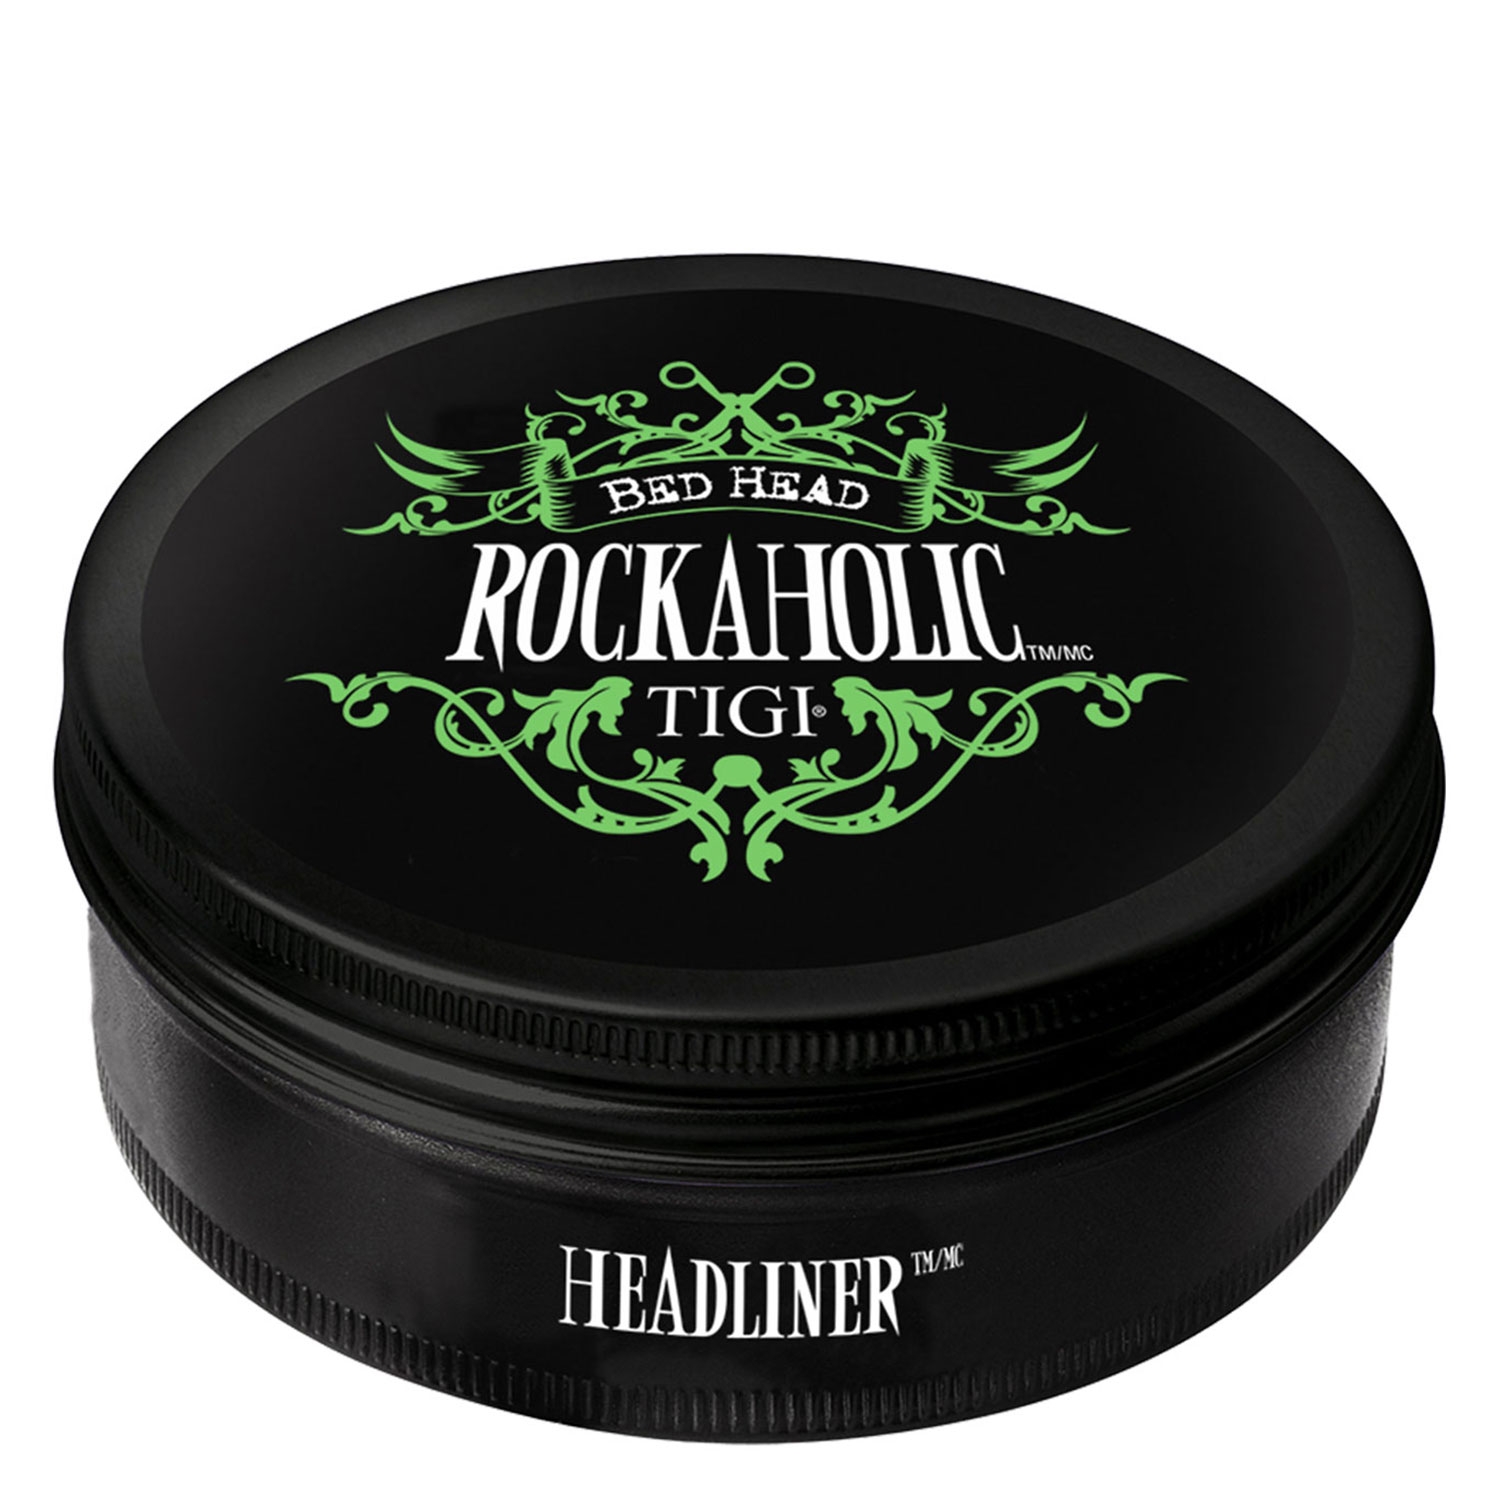 Image du produit de Bed Head Rockaholic - Headliner Styling Paste